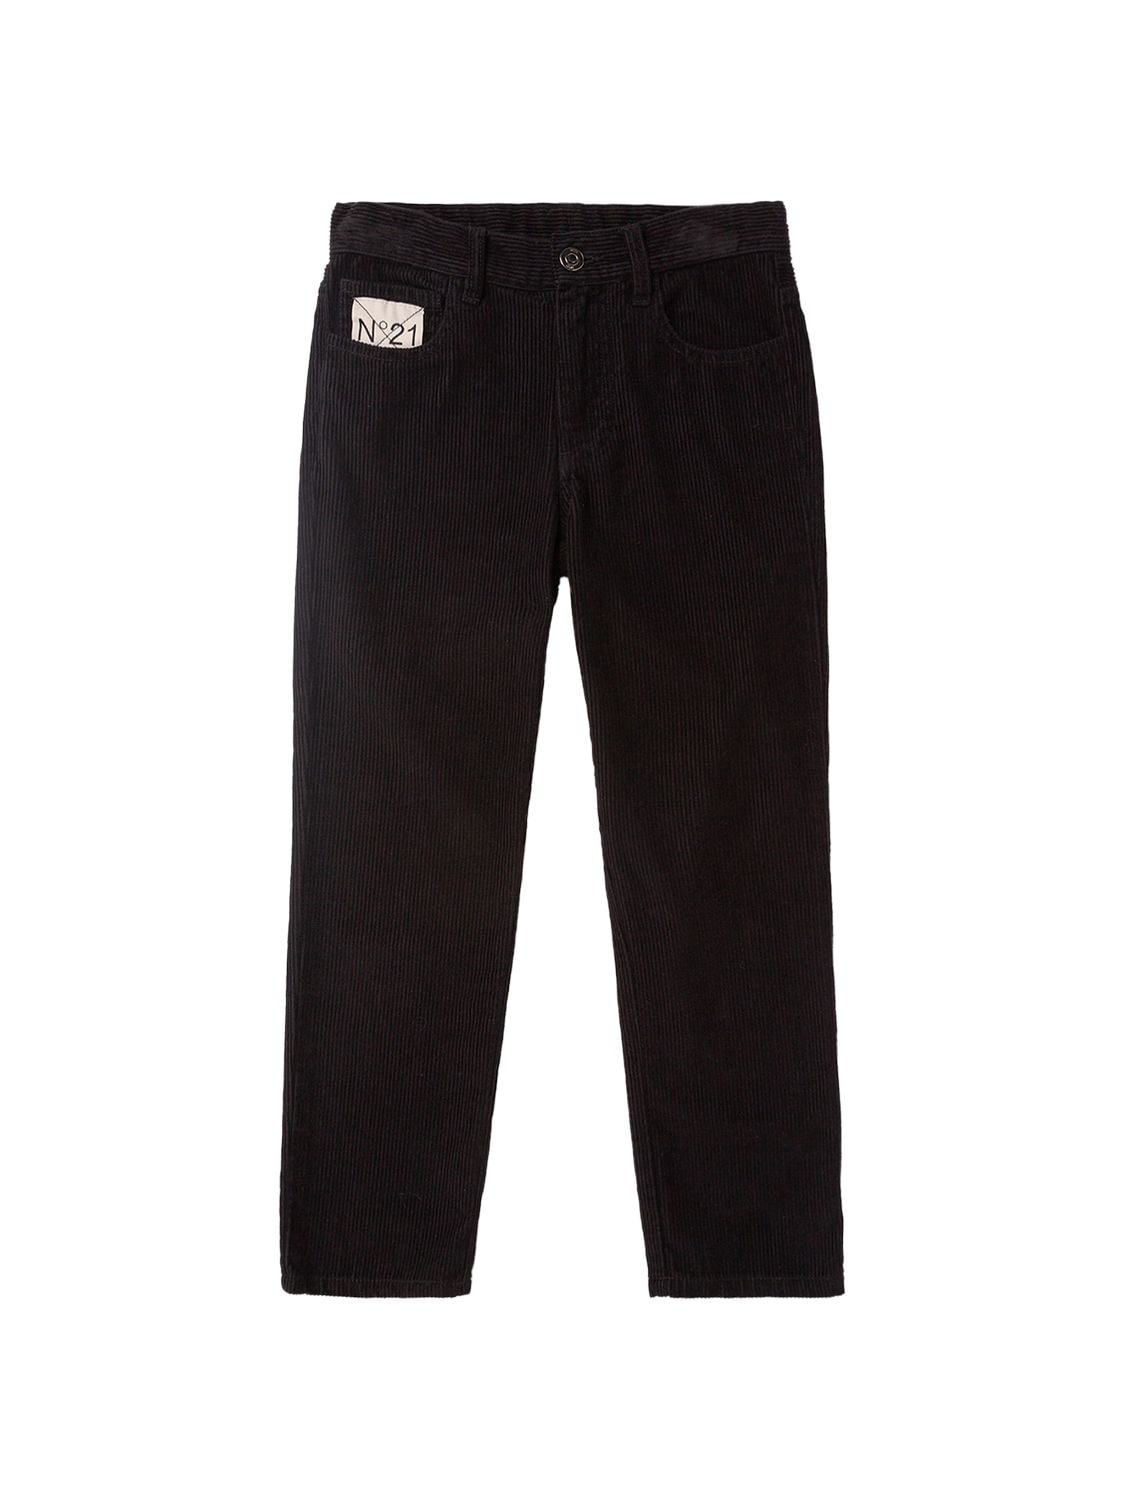 N°21 Kids' Cotton Denim Jeans W/ Logo In Black